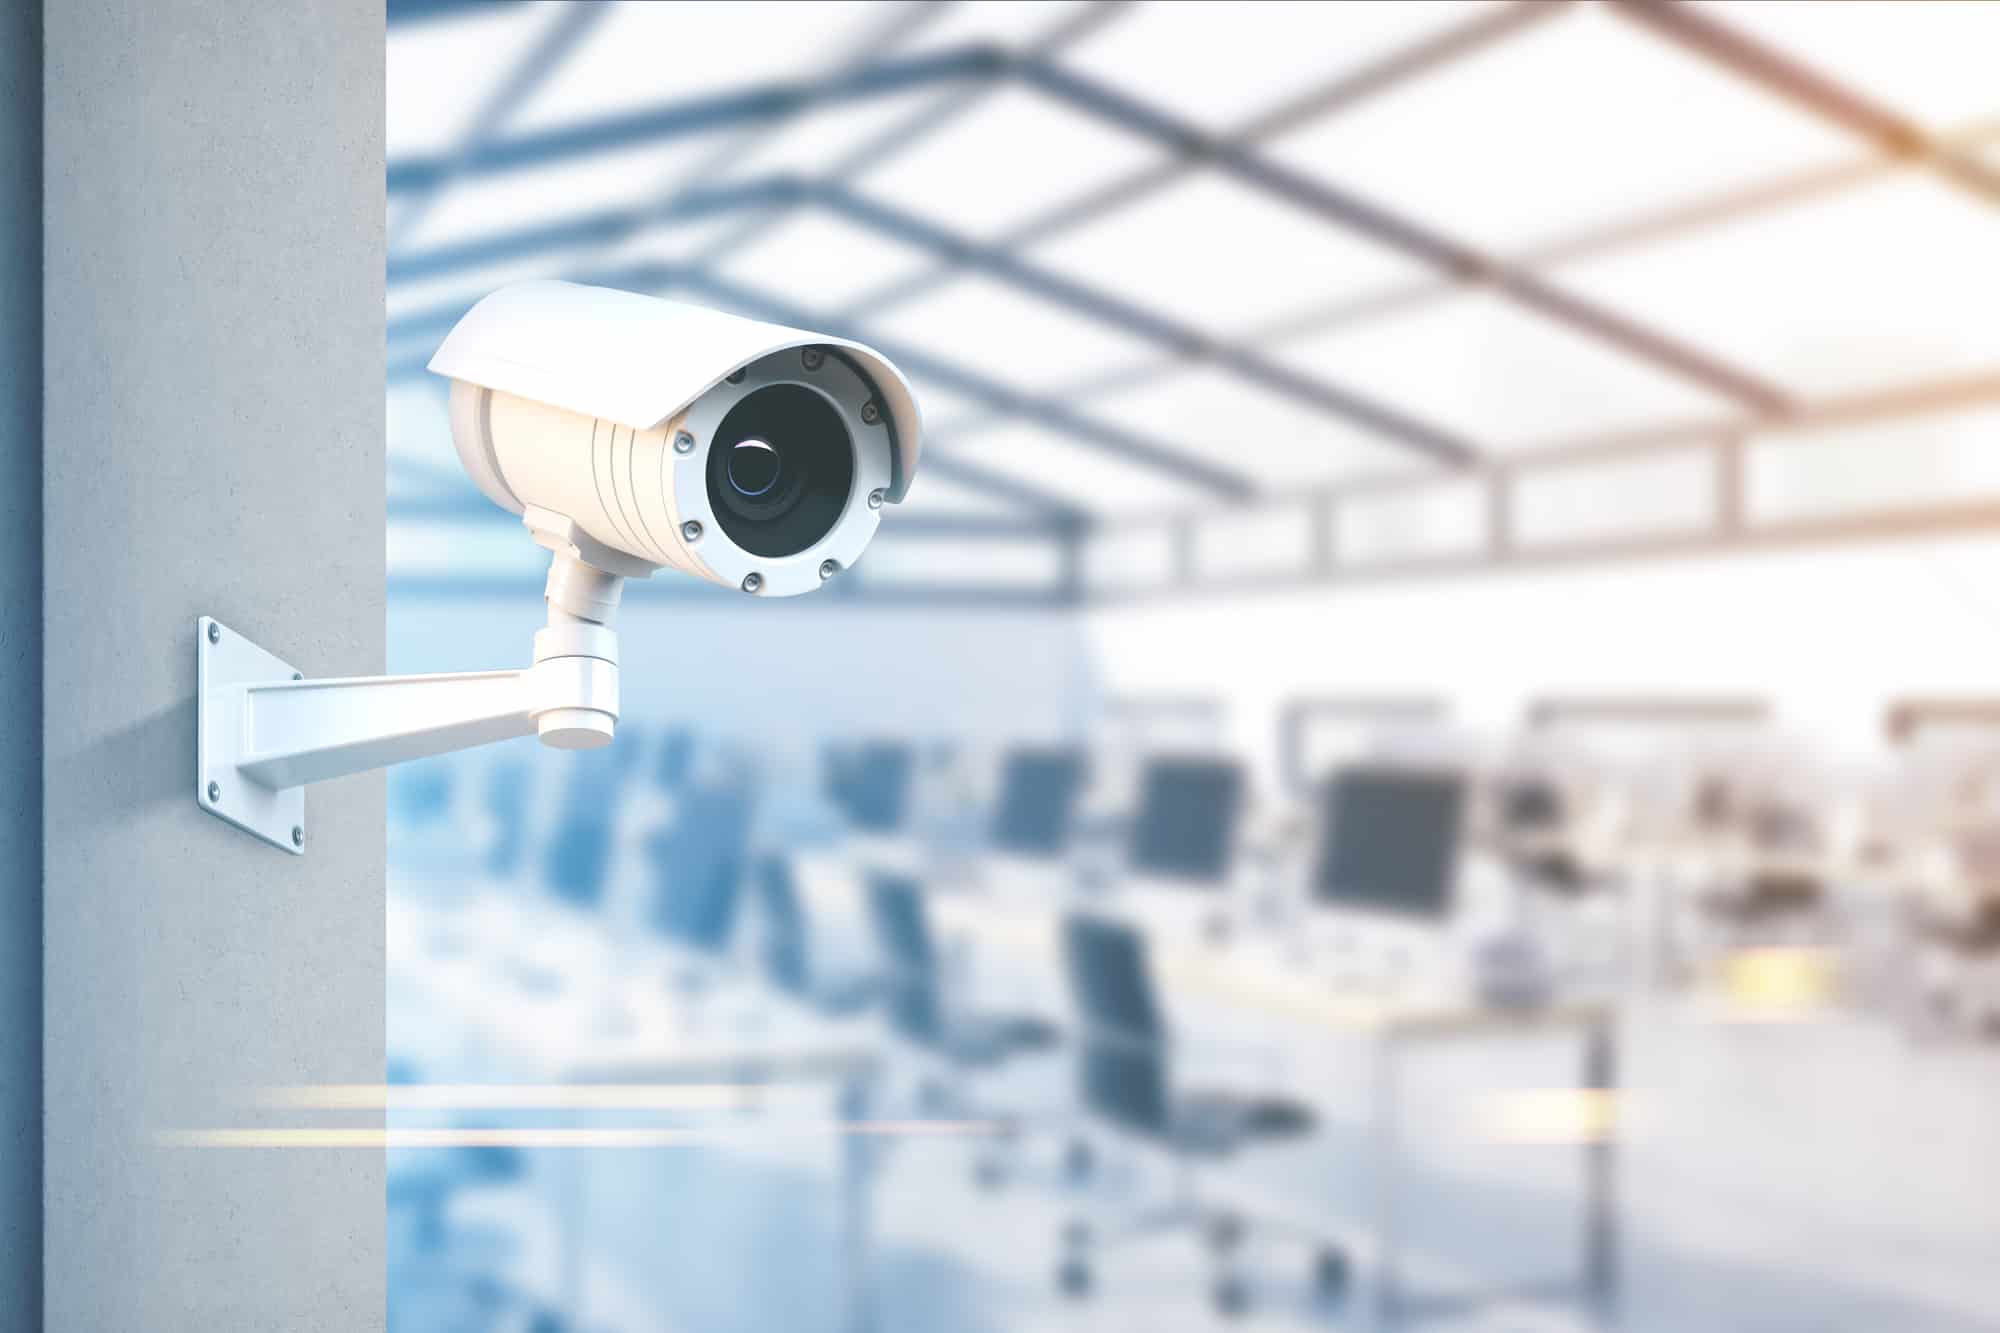 security cameras company business plan